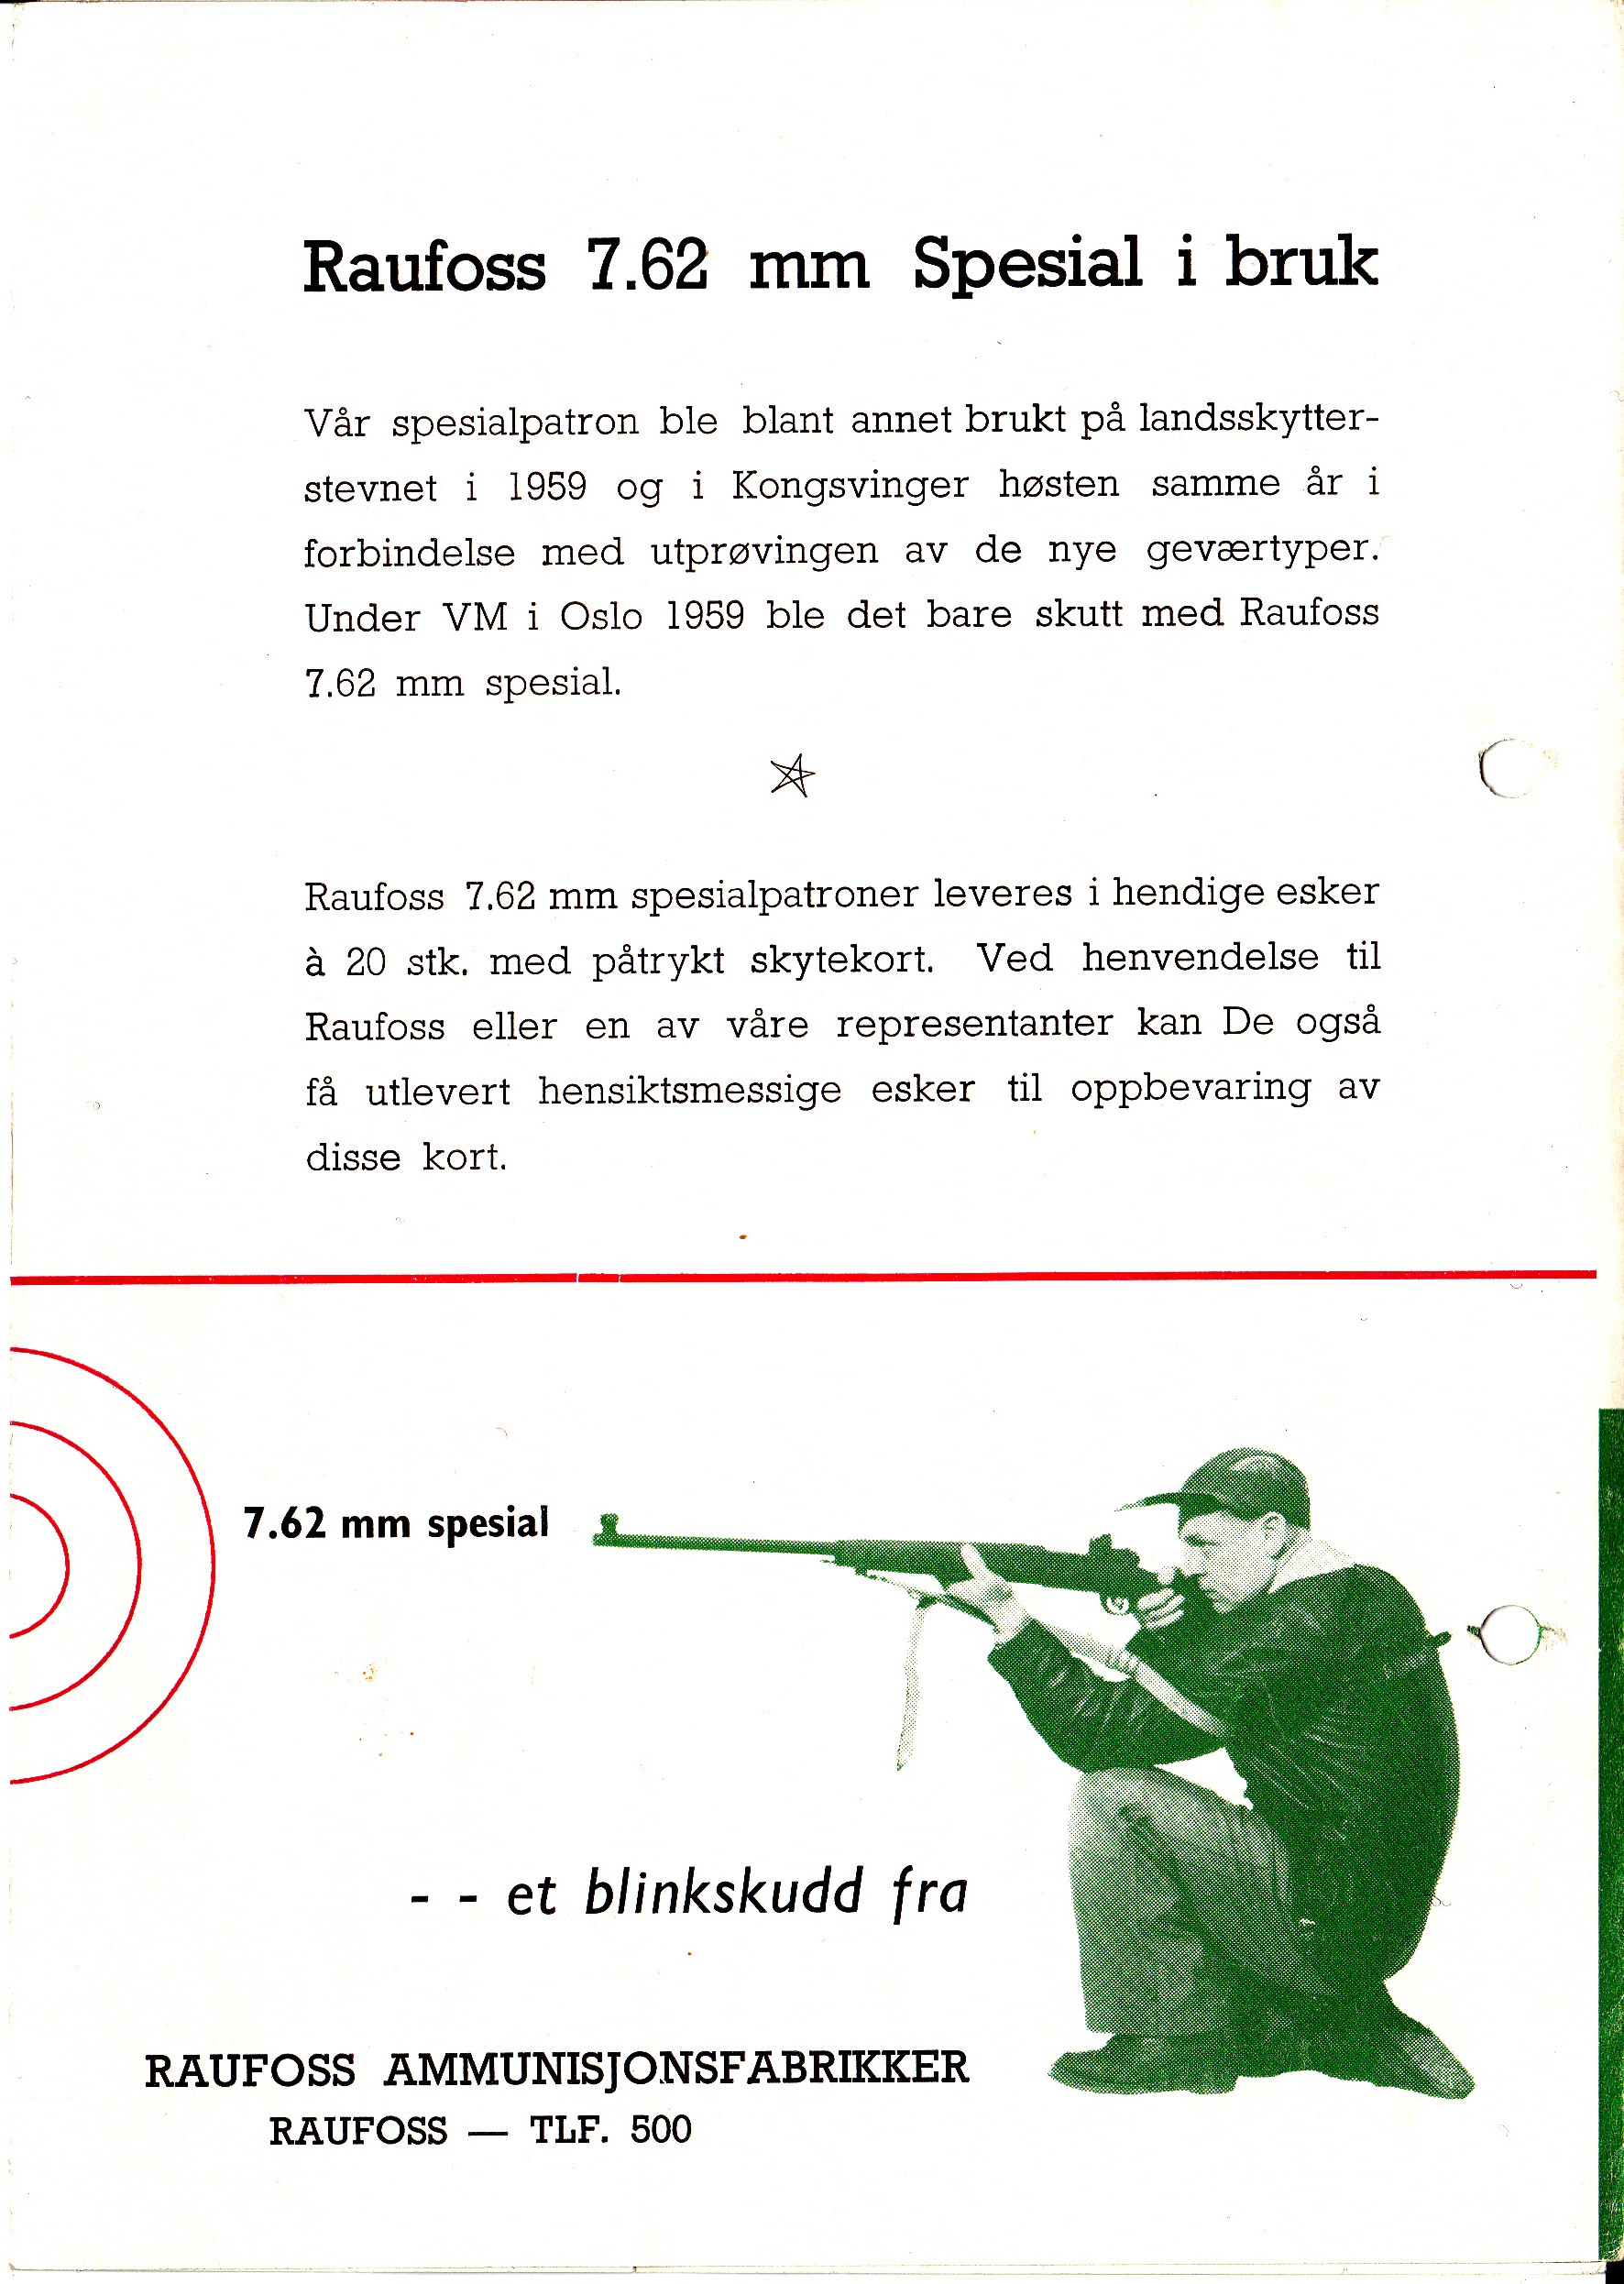 ./guns/rifle/bilder/Rifle-Kongsberg-Mauser-M59-Ammo-5.jpg